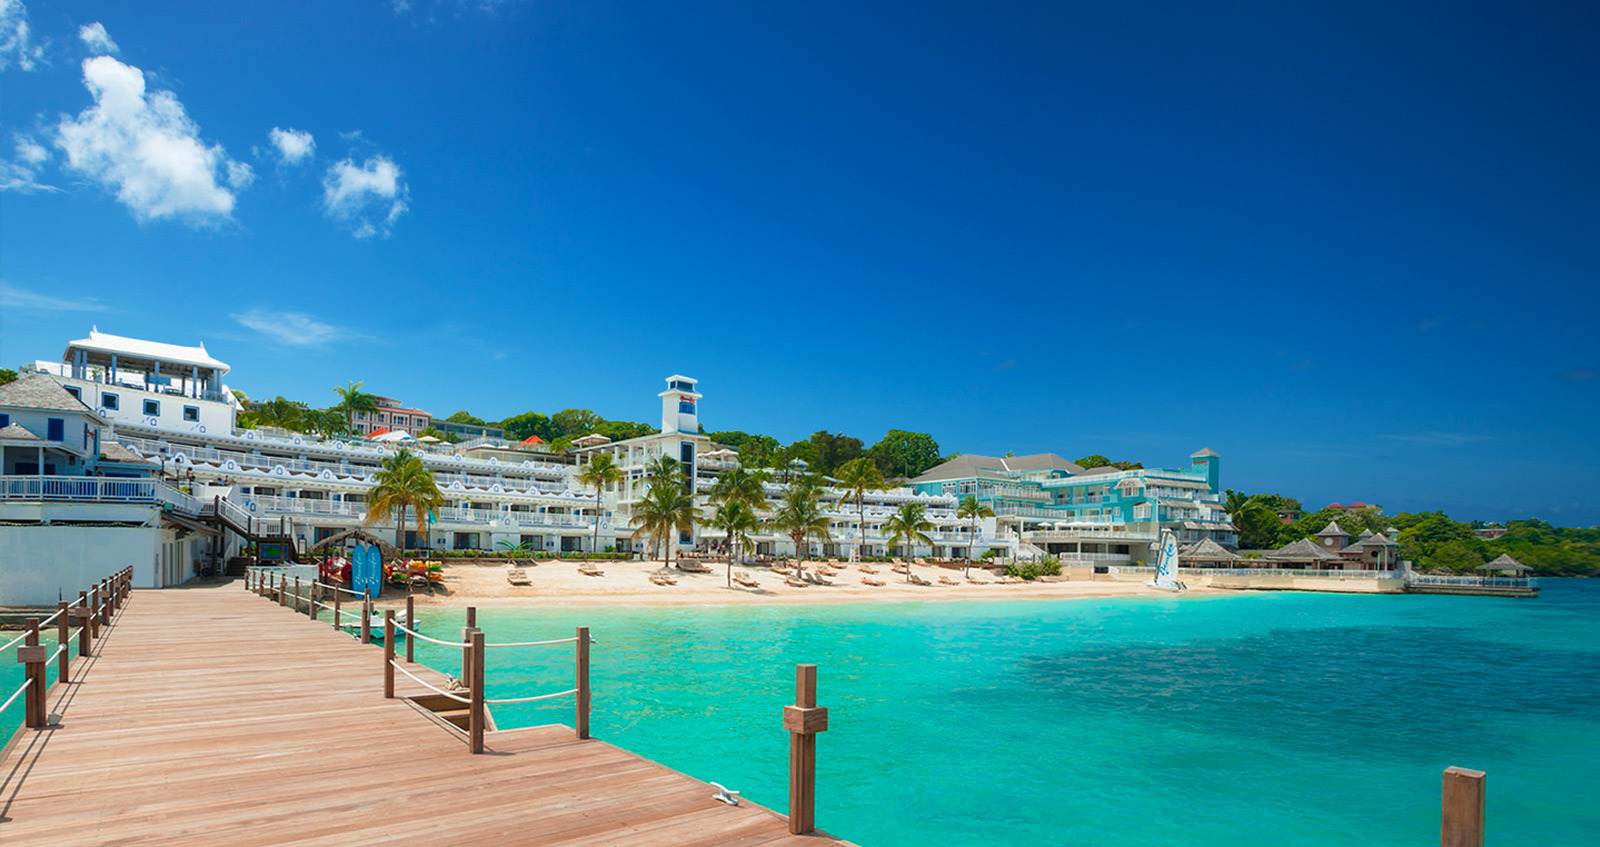 Beaches® Ocho Rios: All-Inclusive Holiday Resort In Jamaica